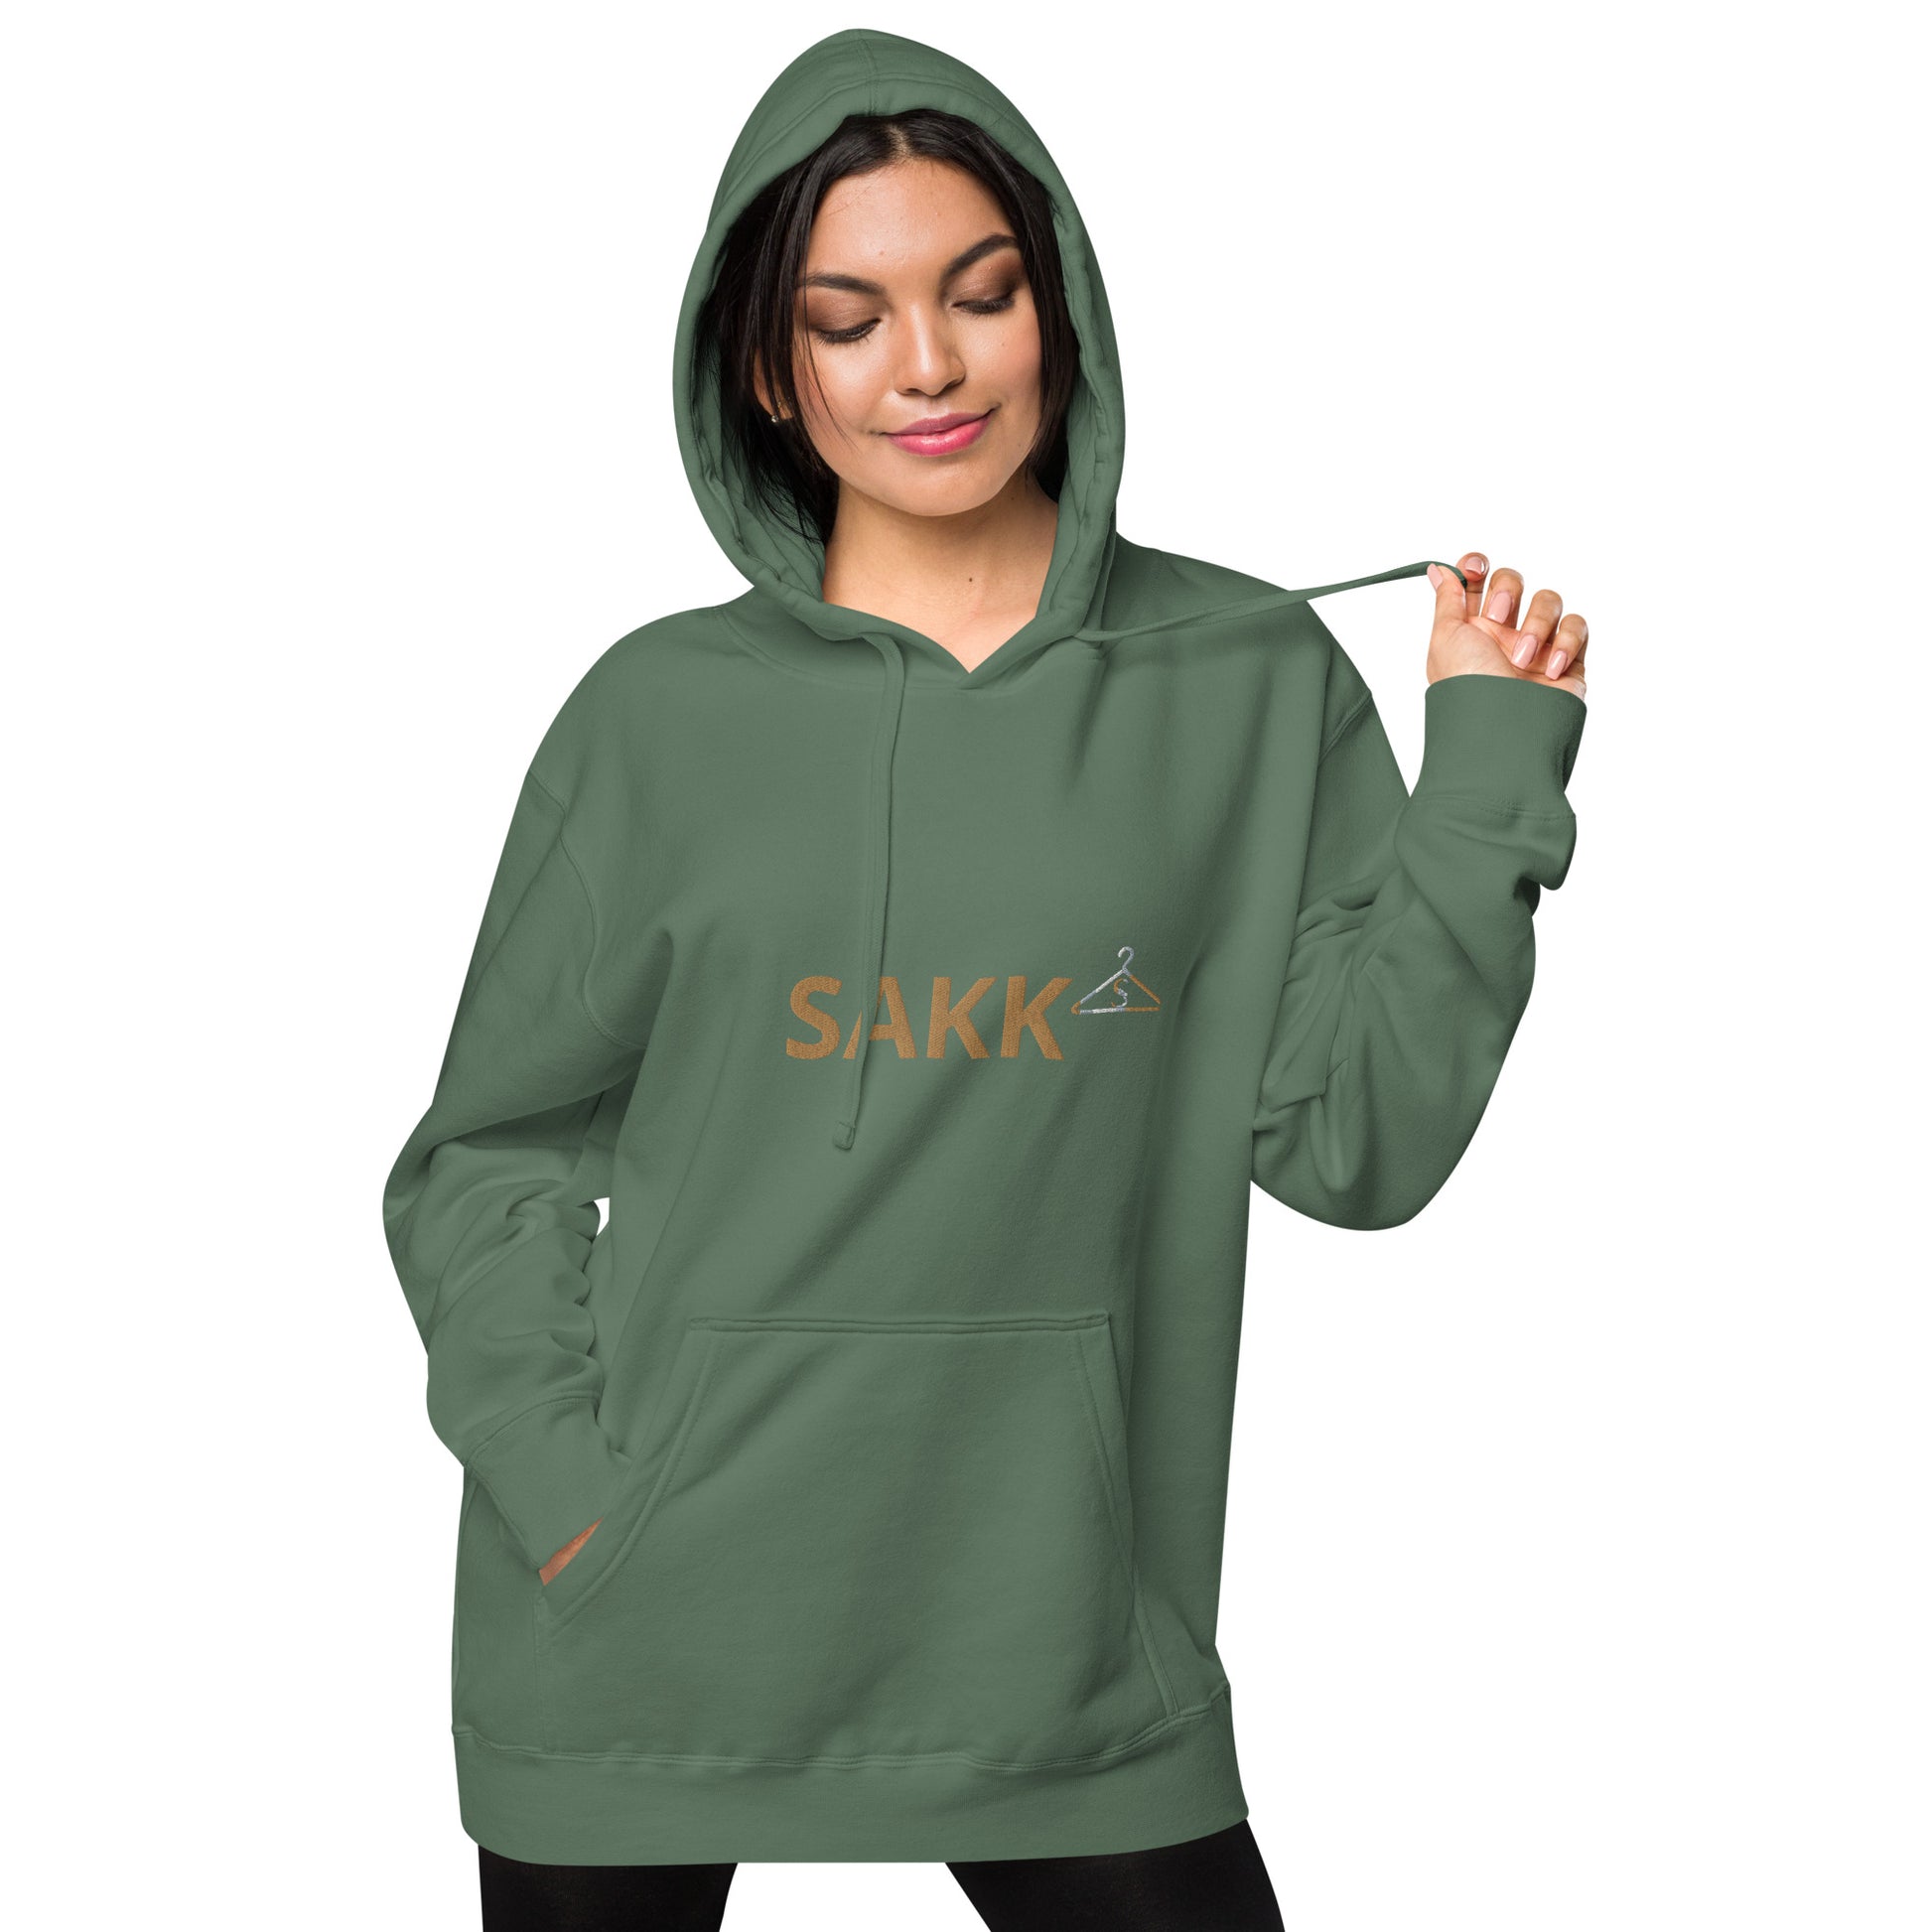 Gims Unisex pigment-dyed hoodie sakkstyles.com